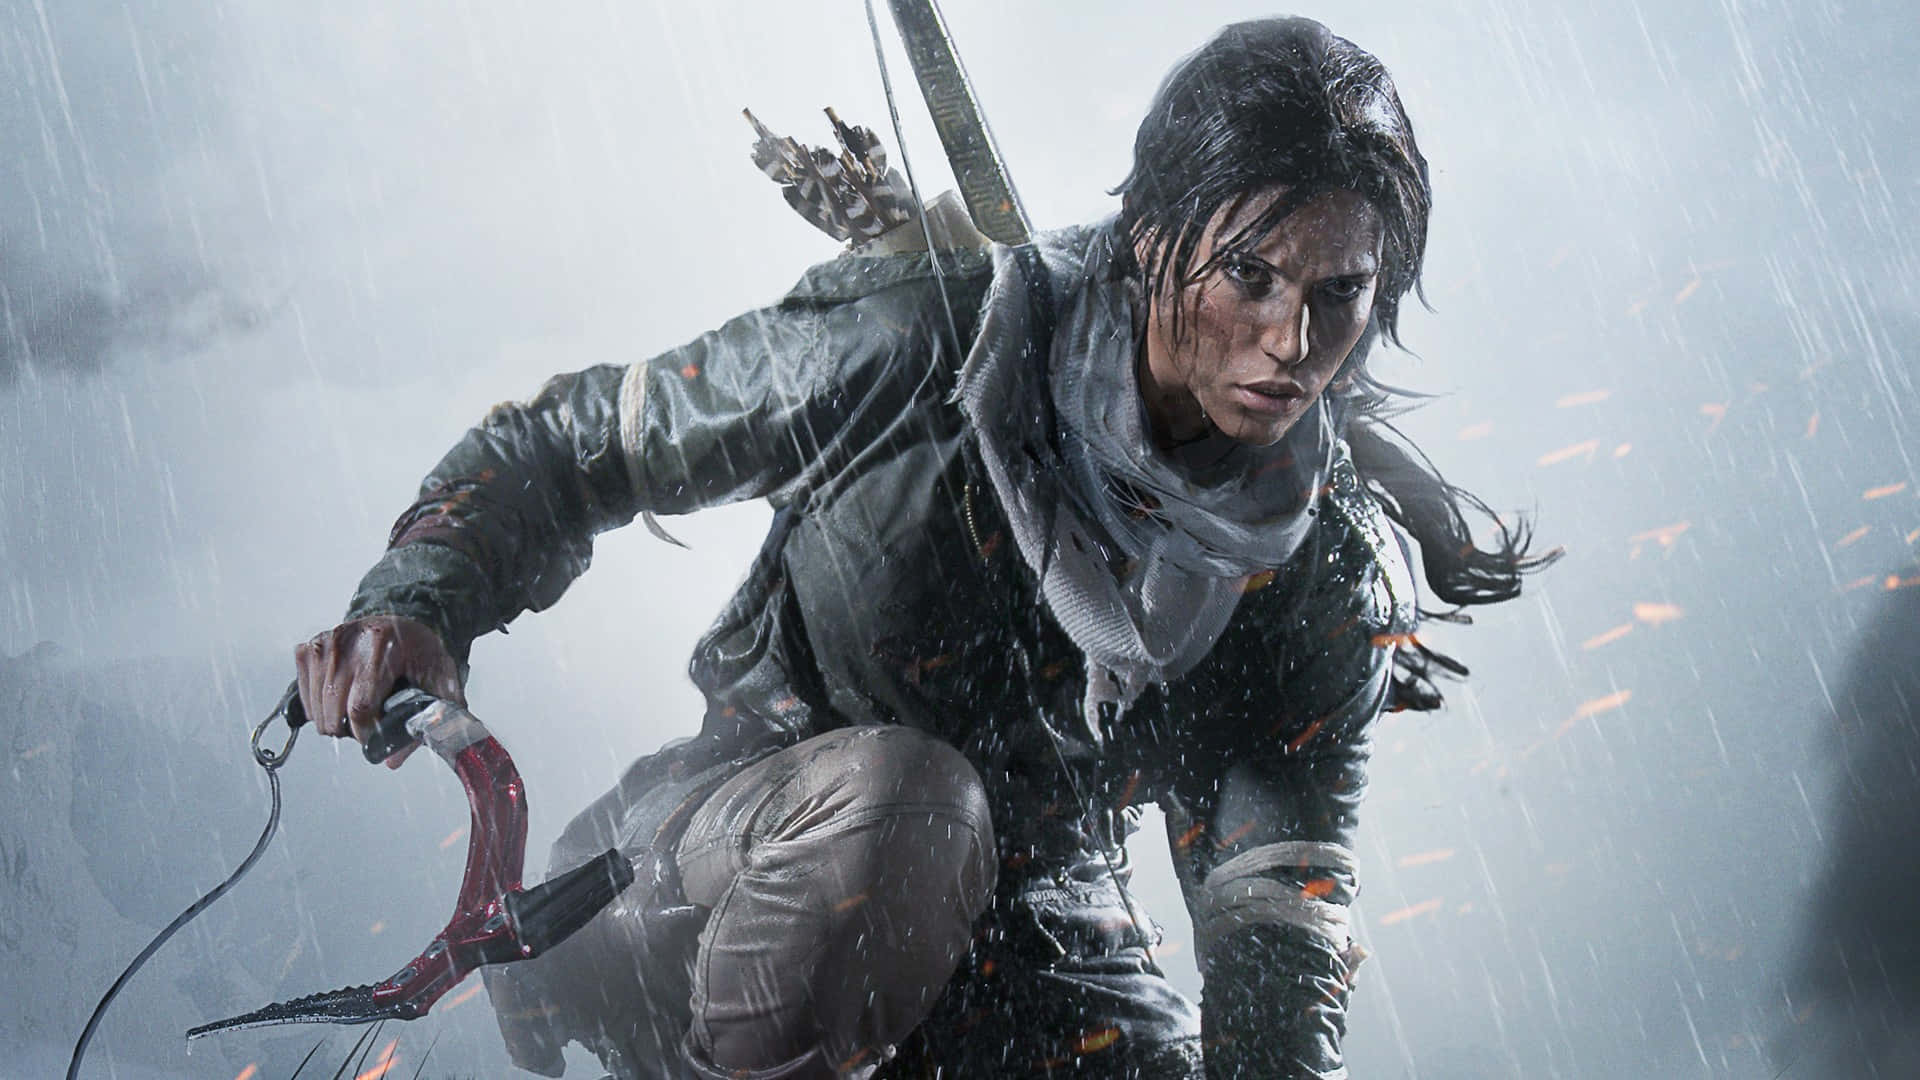 Laracroft Strider Mot Kylan I Sibirien I Rise Of The Tomb Raider.